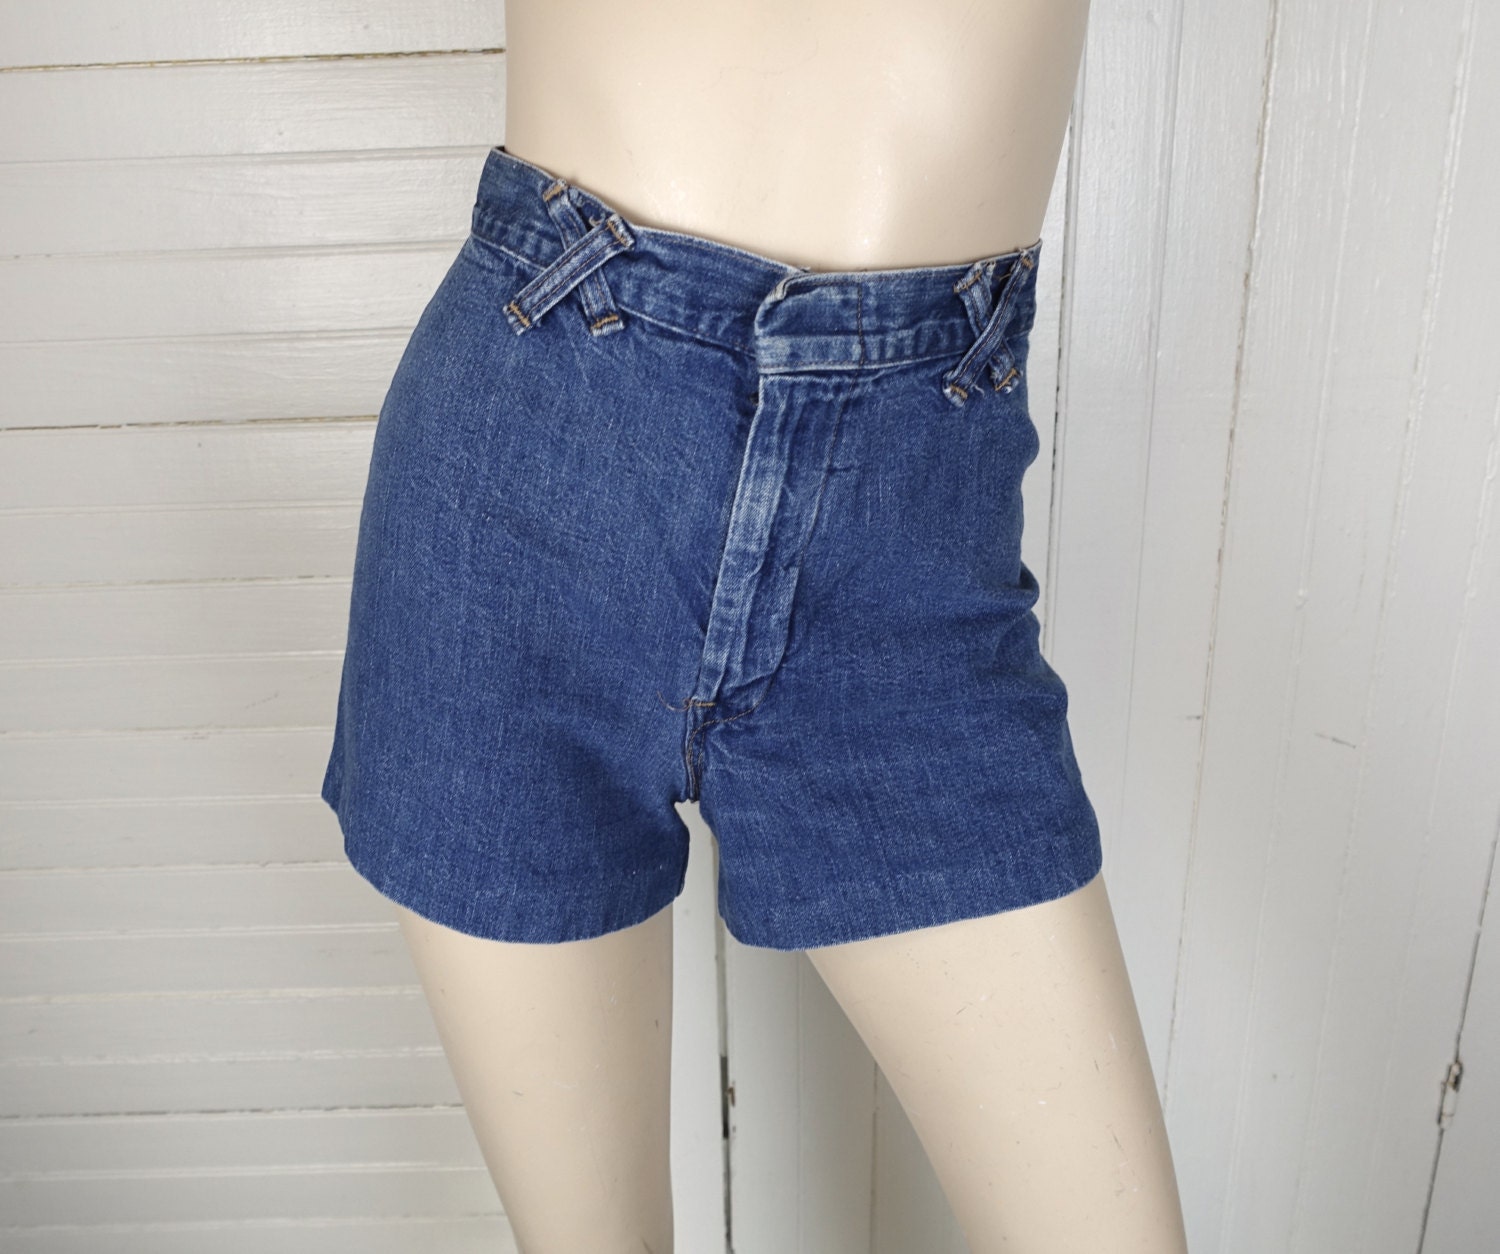 SALE 70s Denim Shorts 1970s High Waist Jeans Pin Up / Hot